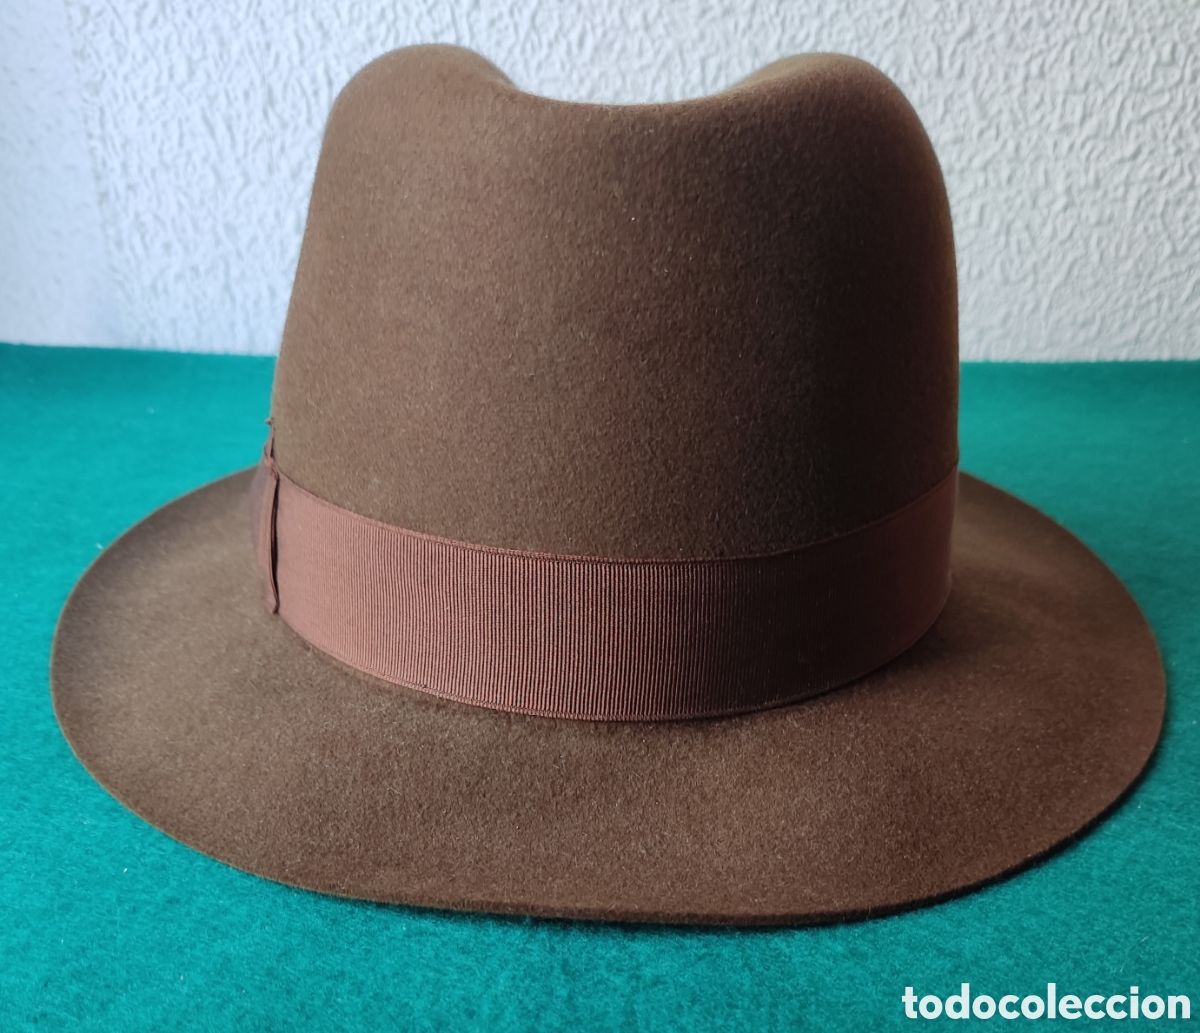 sombrero borsalino modelo fedora marca alessand - Compra venta en